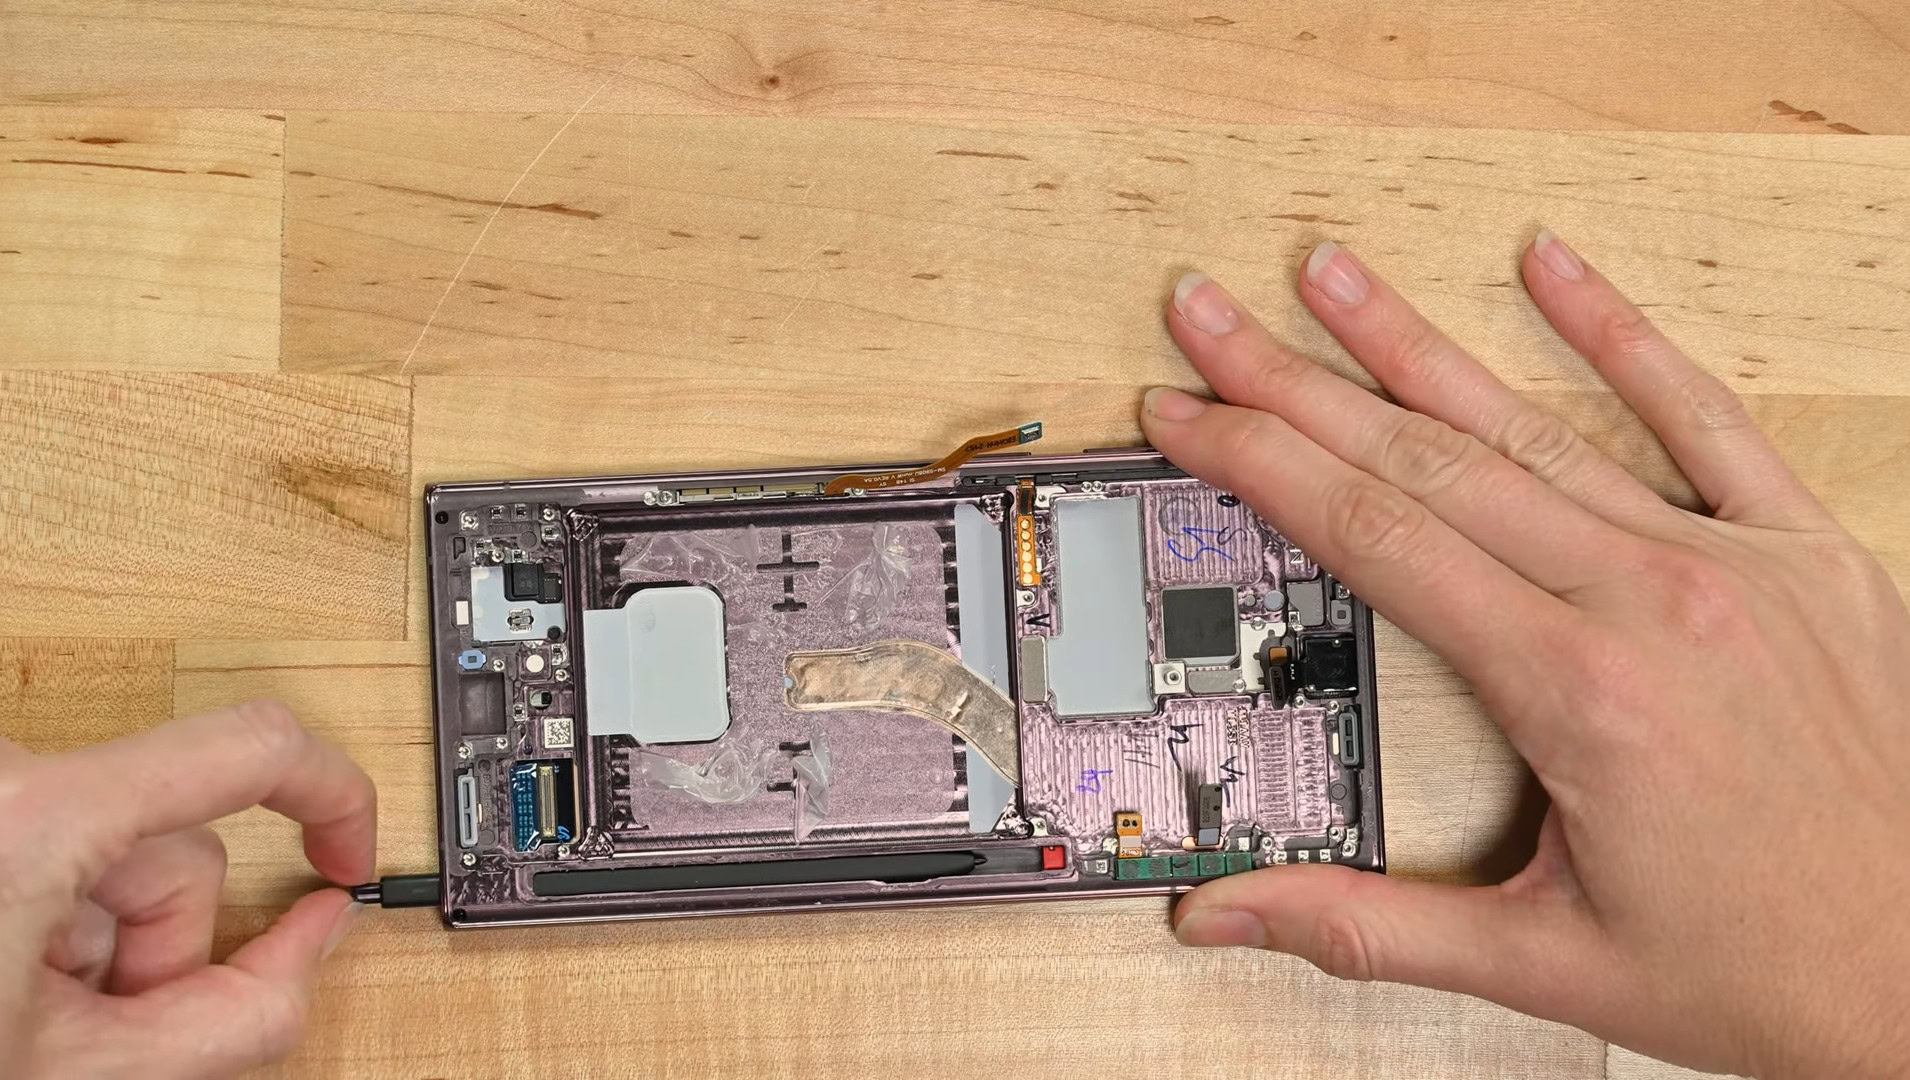 Samsung Phone Repair - iFixit